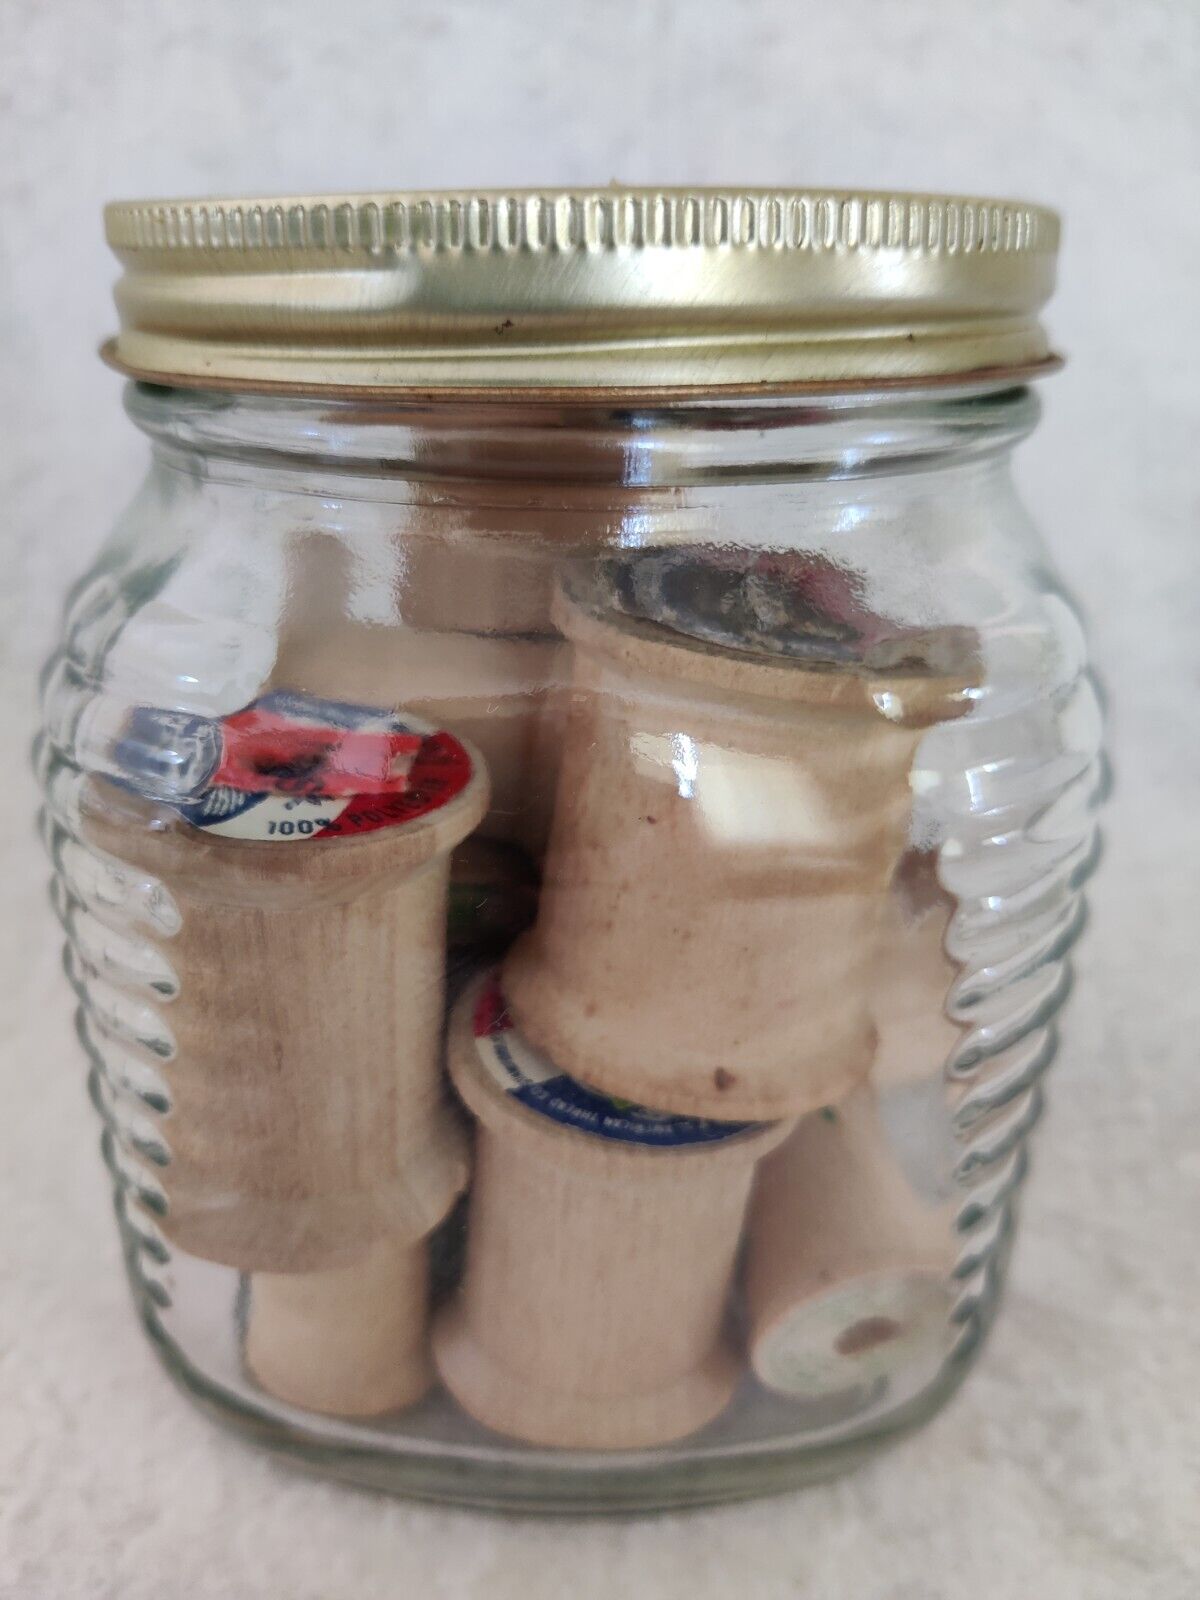 Wood Sewing Thread Spools Empty Lot Of 15 Vintage Wooden Hobby Craft Talon jar